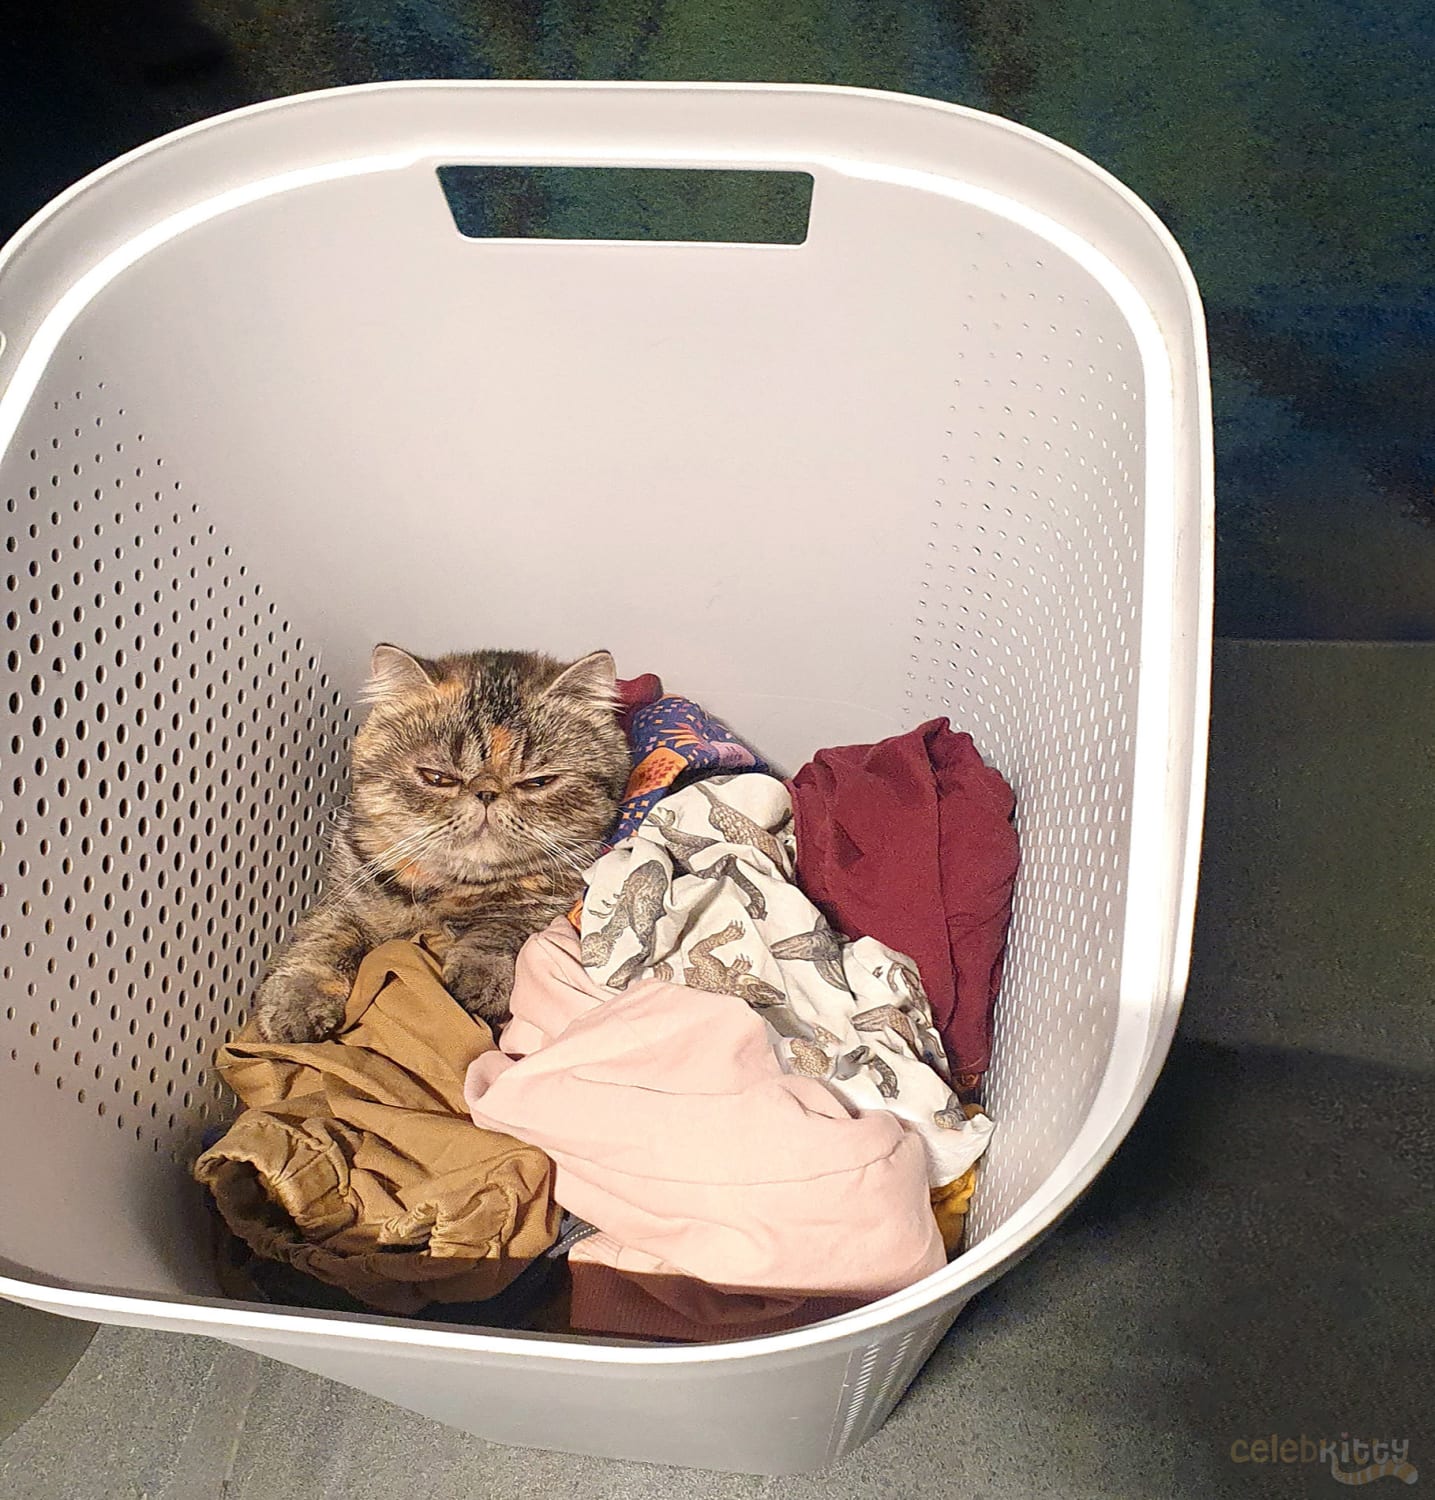 Smol laundry sorter